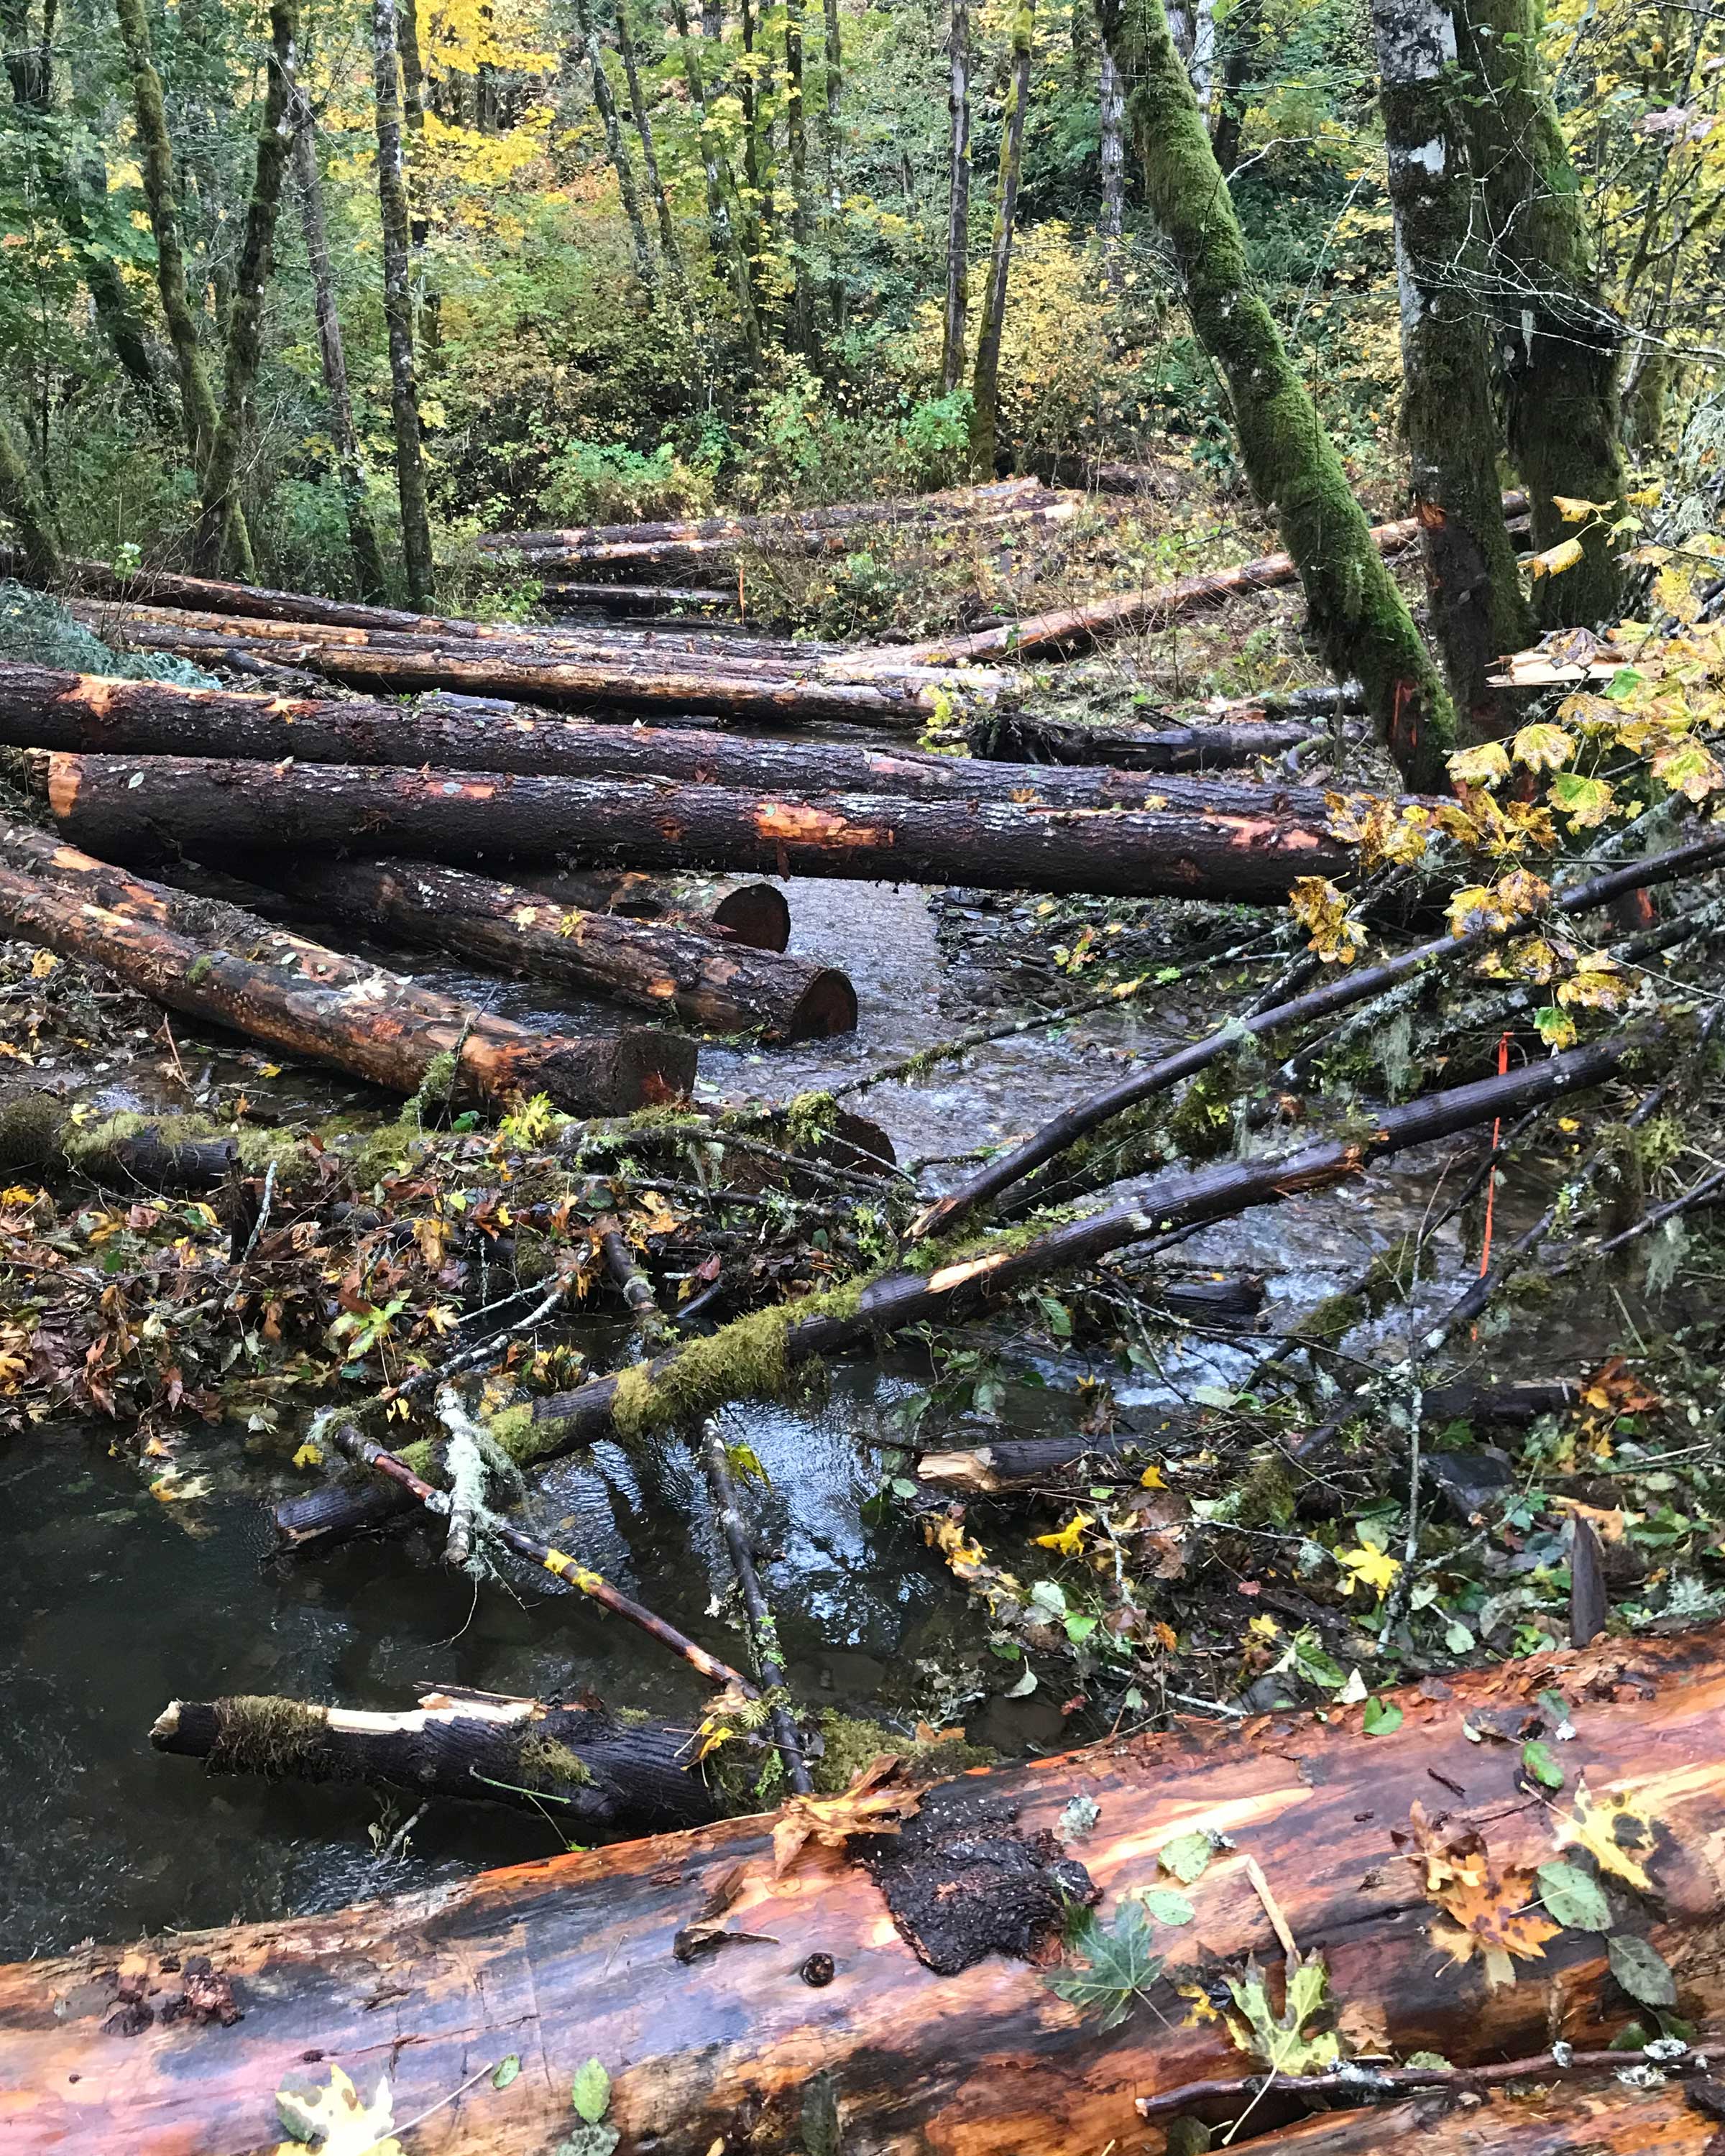 Logs in the creek.